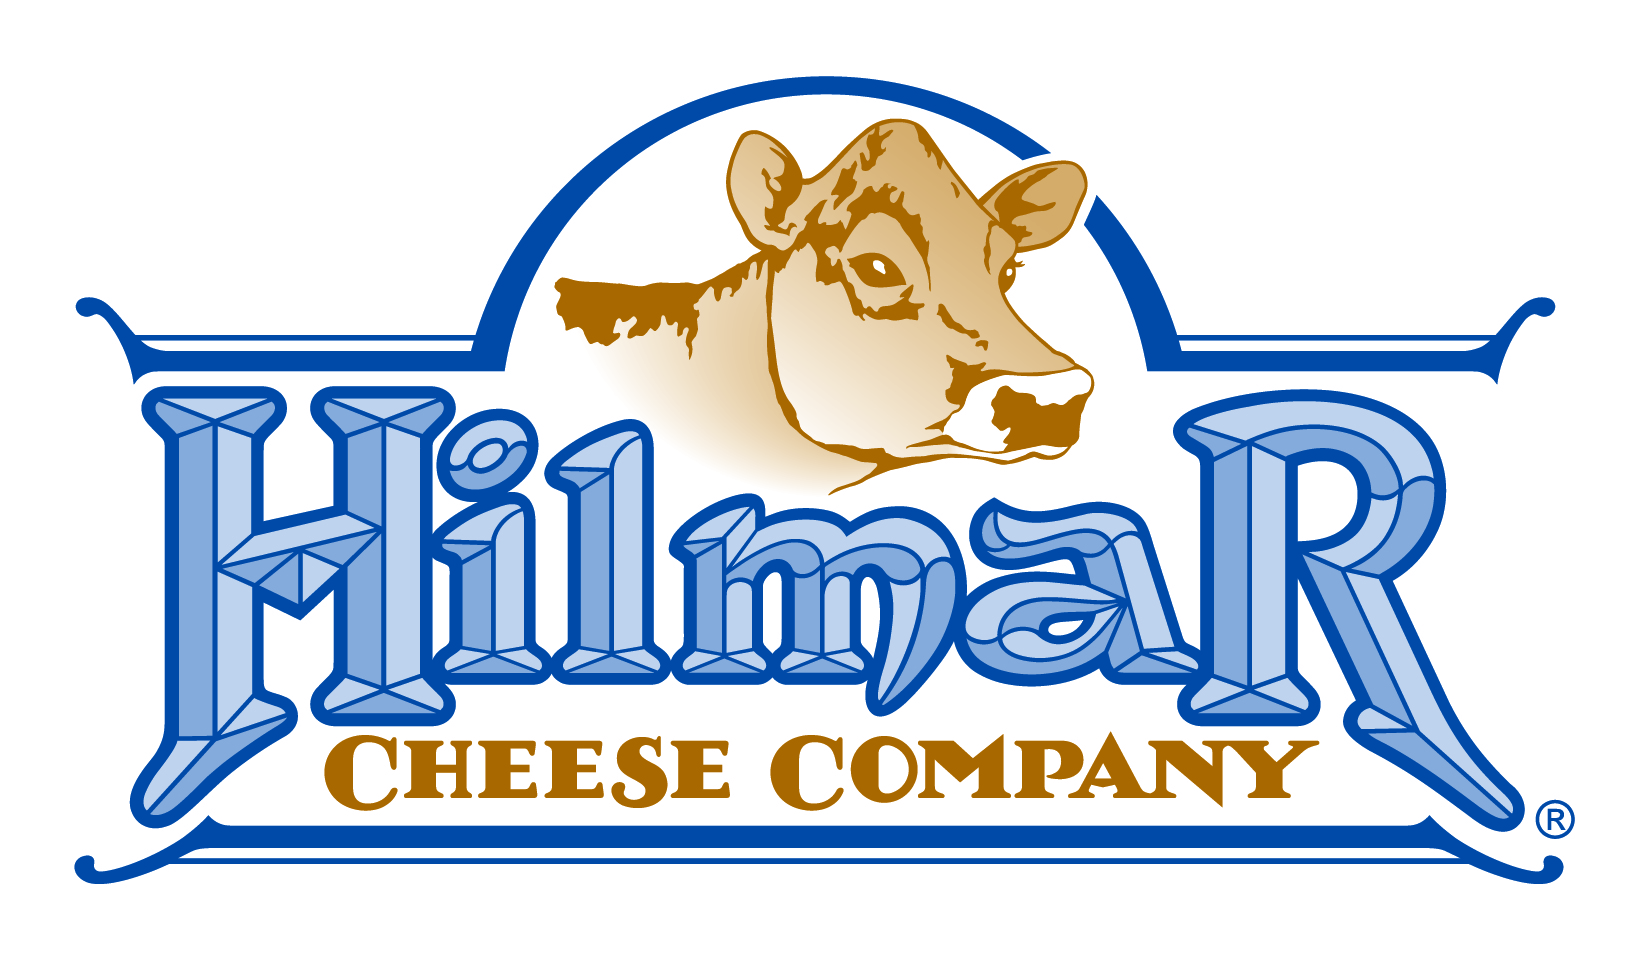 hilmar-cheese-company-logo